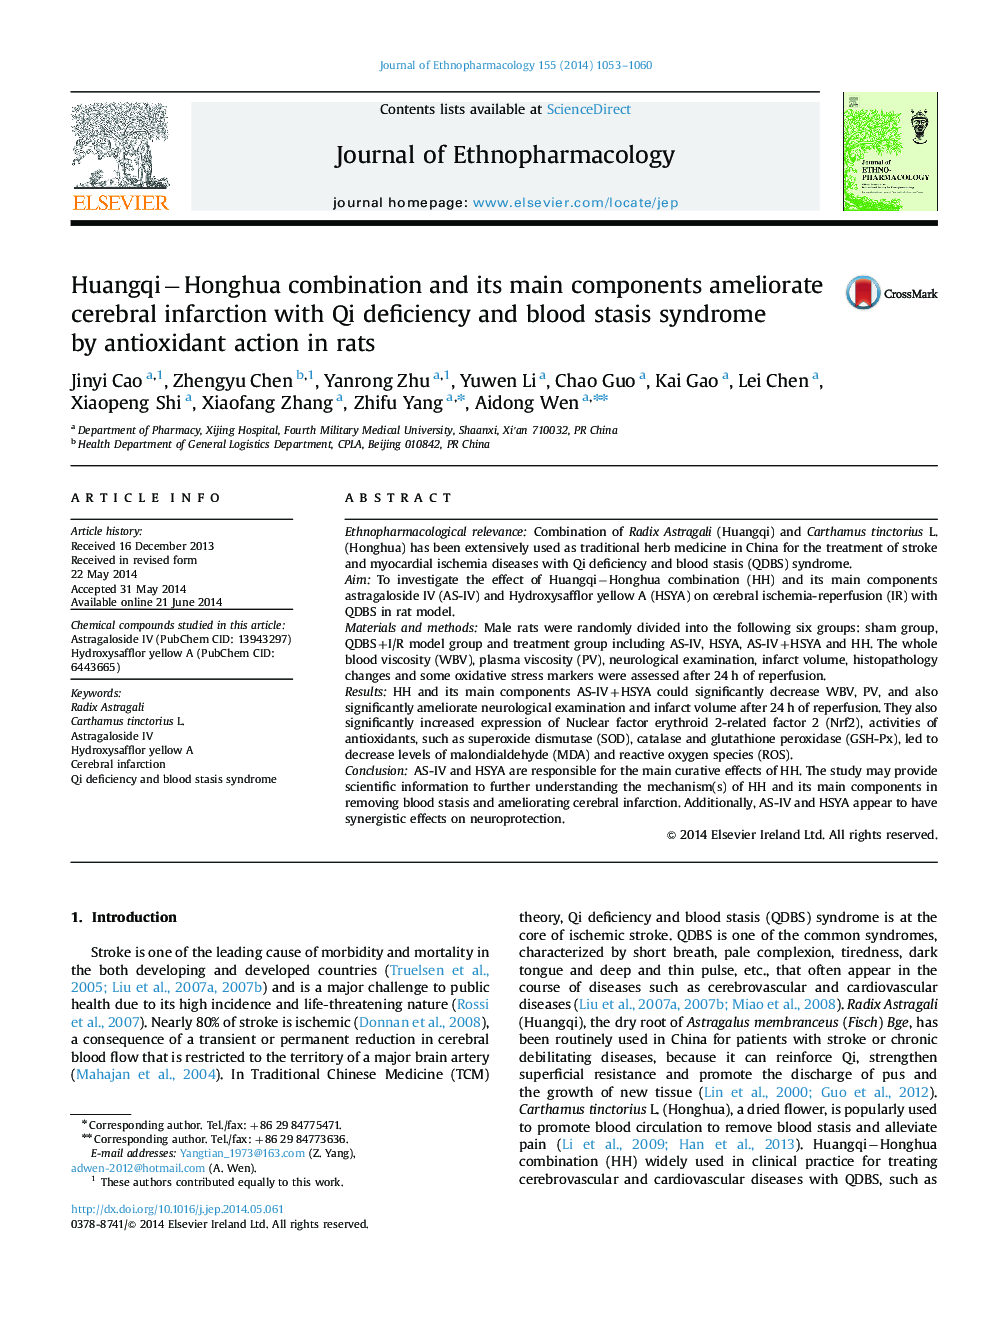 HuangqiâHonghua combination and its main components ameliorate cerebral infarction with Qi deficiency and blood stasis syndrome by antioxidant action in rats